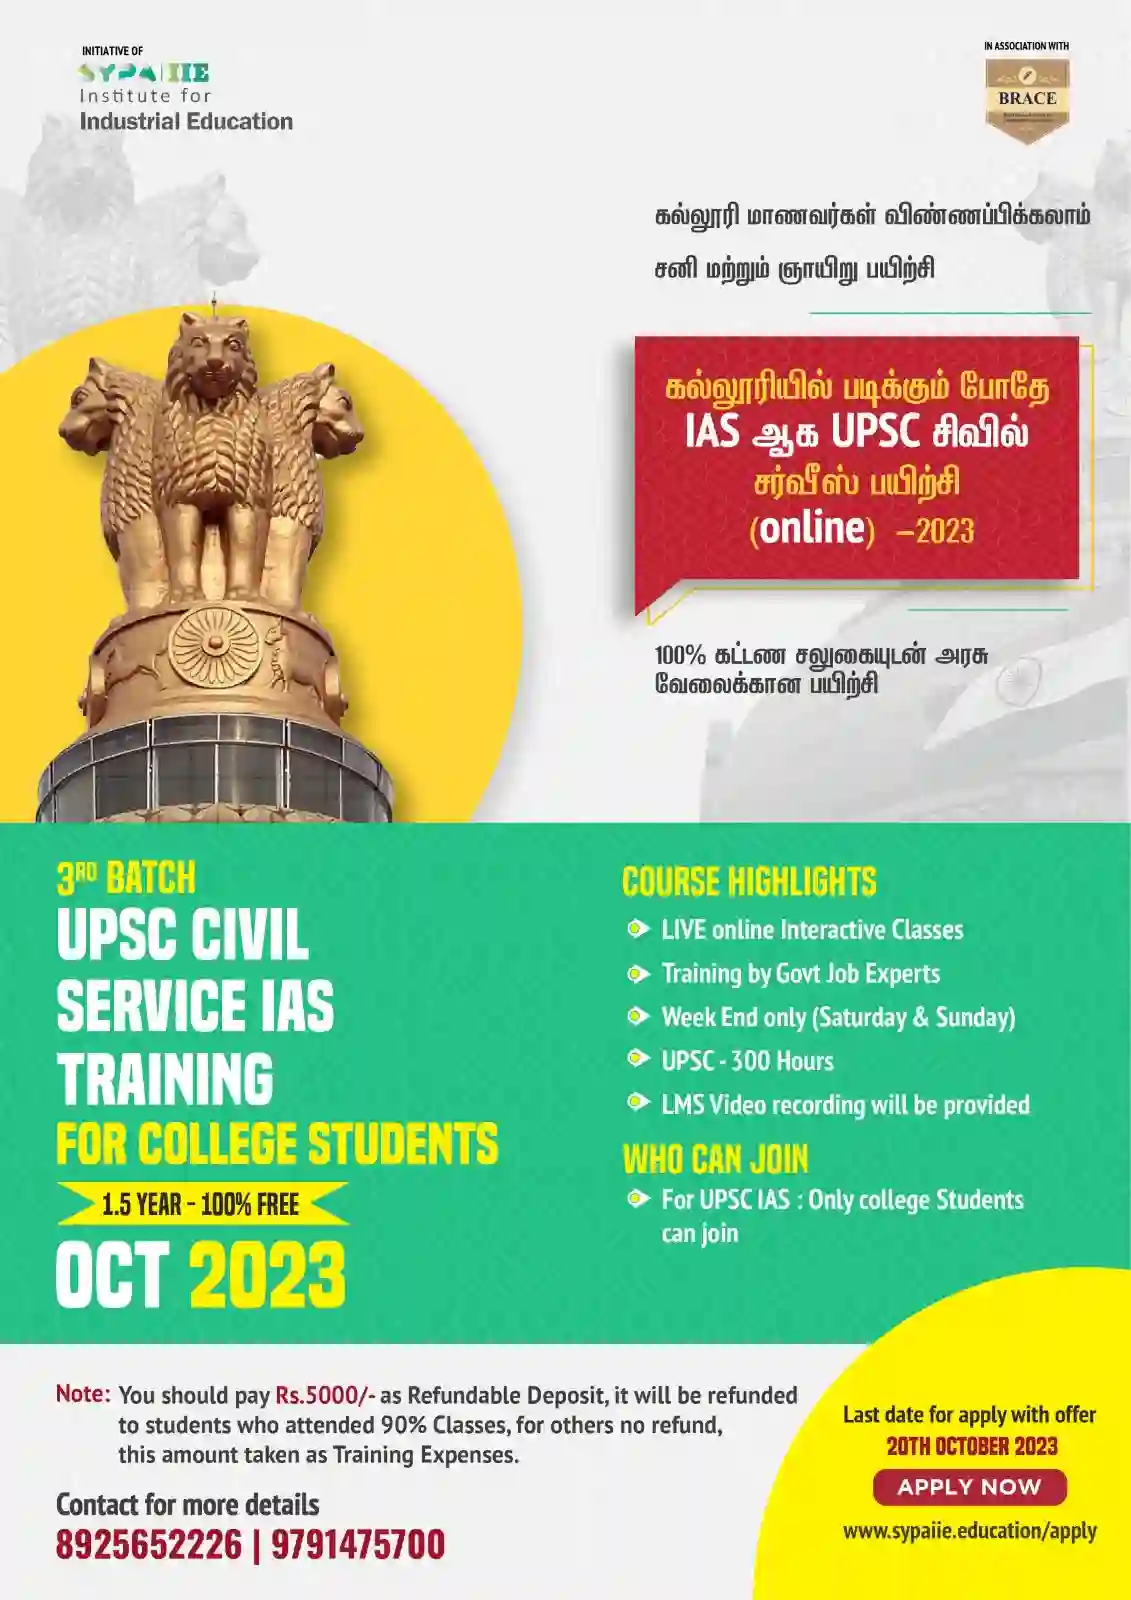 UPSC - 1 Year